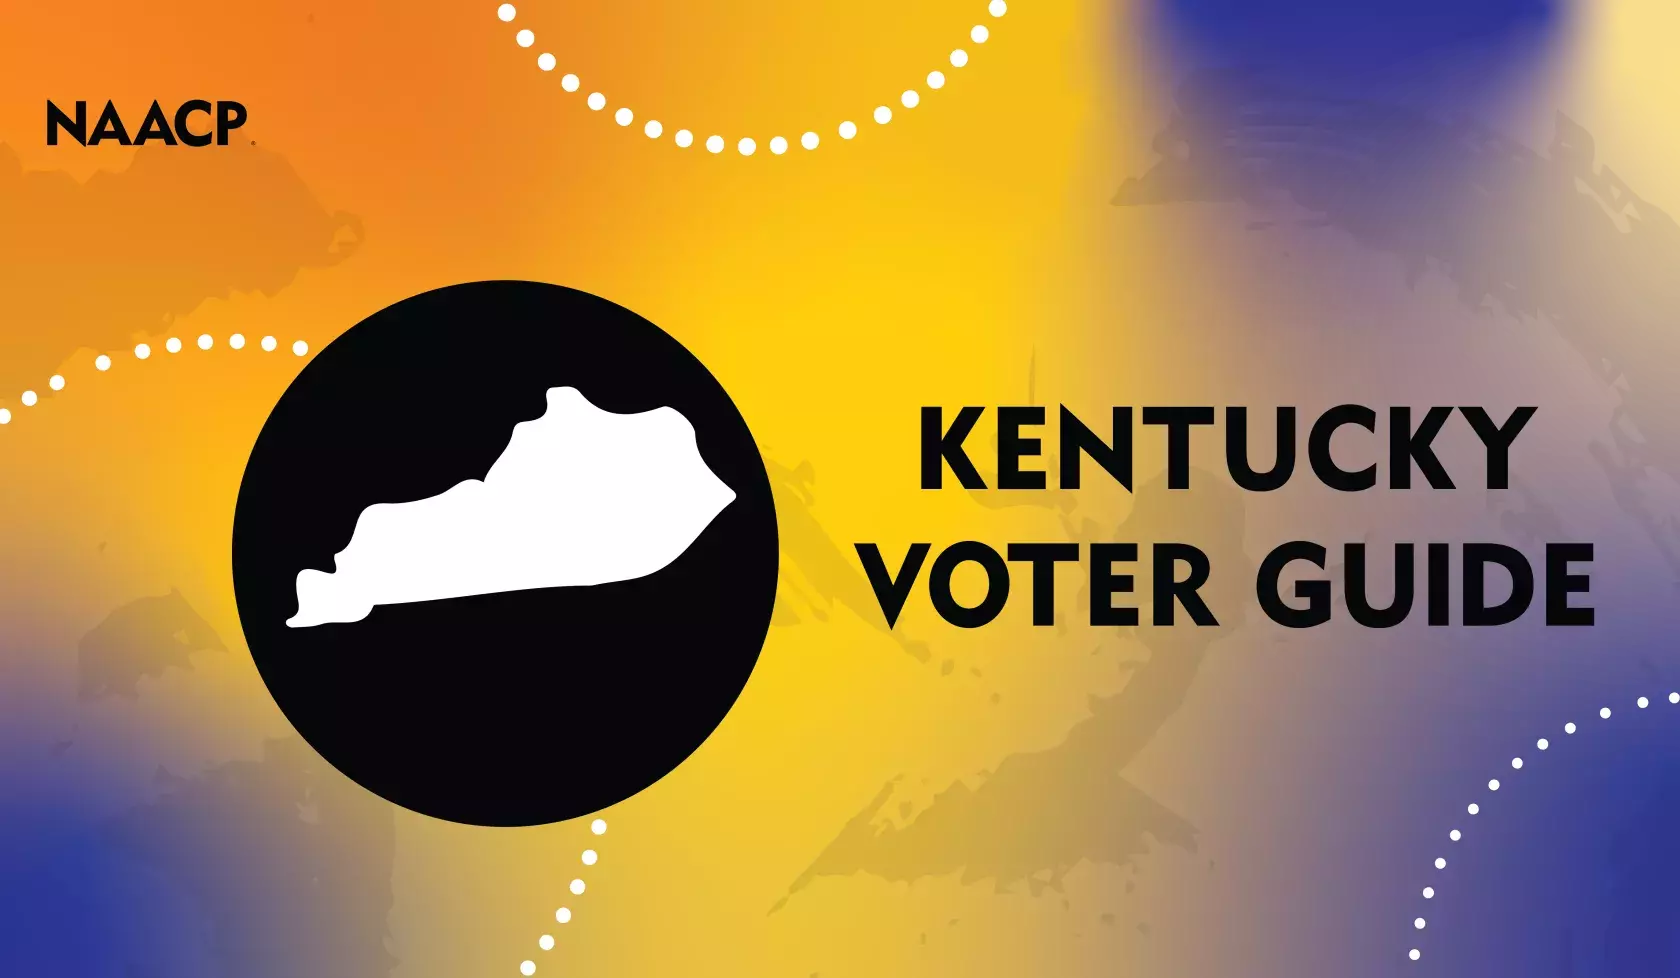 Kentucky Voter Guide - NAACP